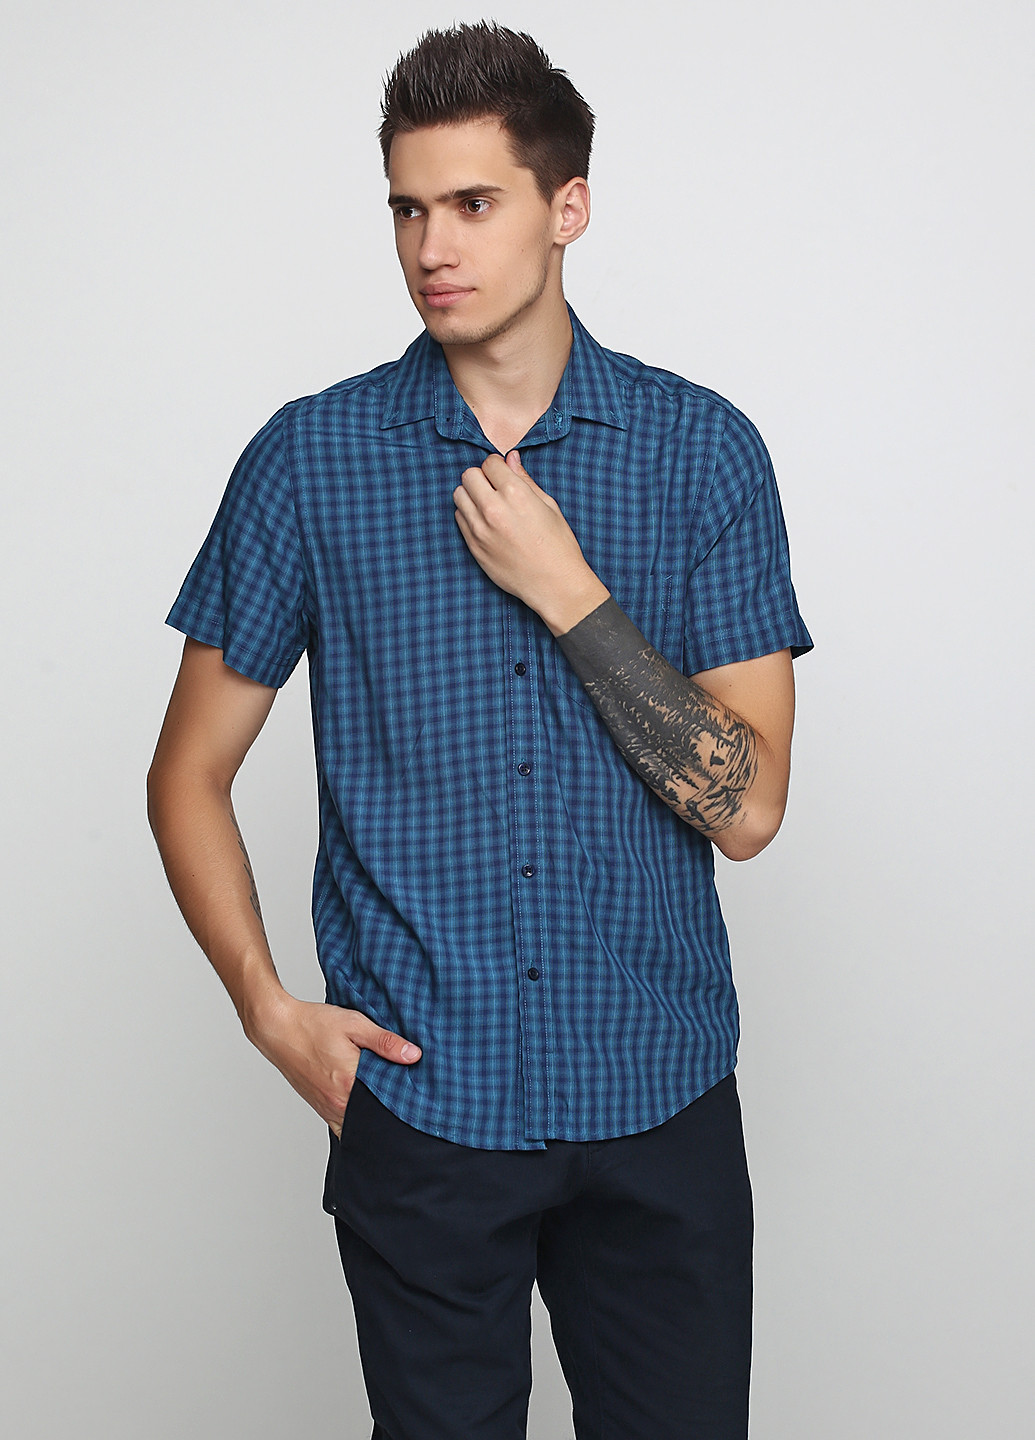 Цветная кэжуал рубашка с геометрическим узором F&F с коротким рукавом